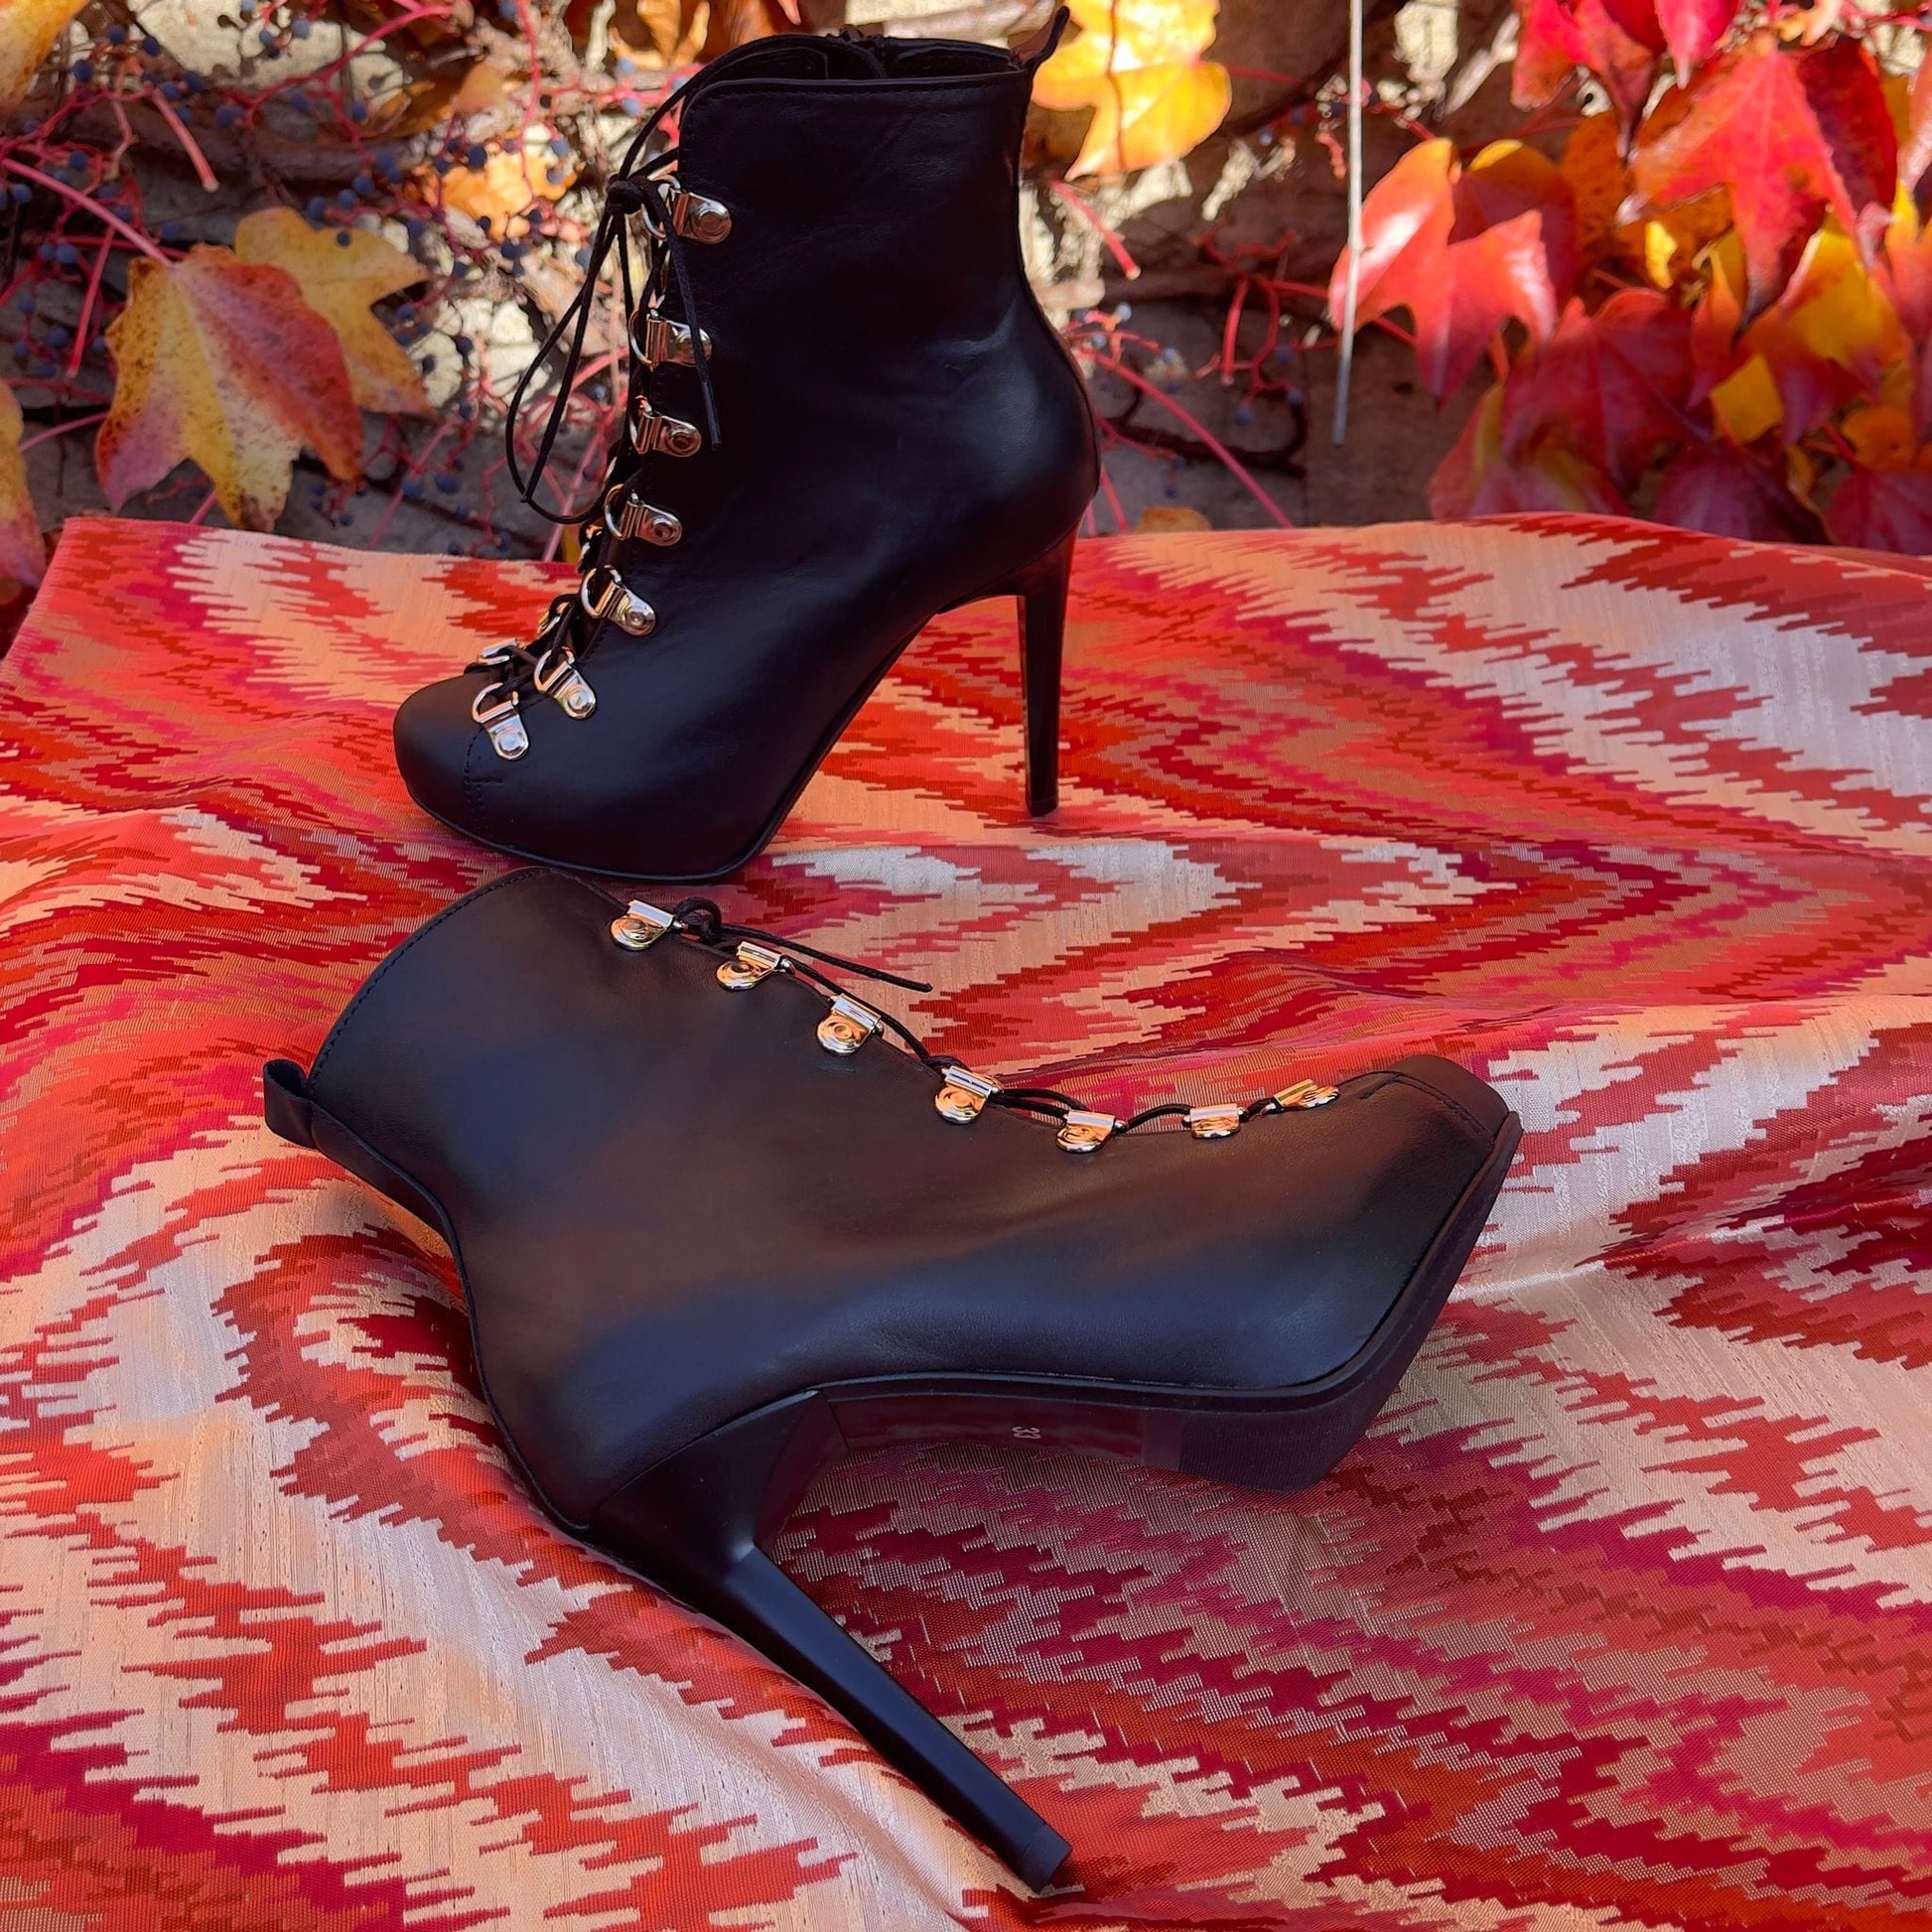 High heel platform boots in black leather